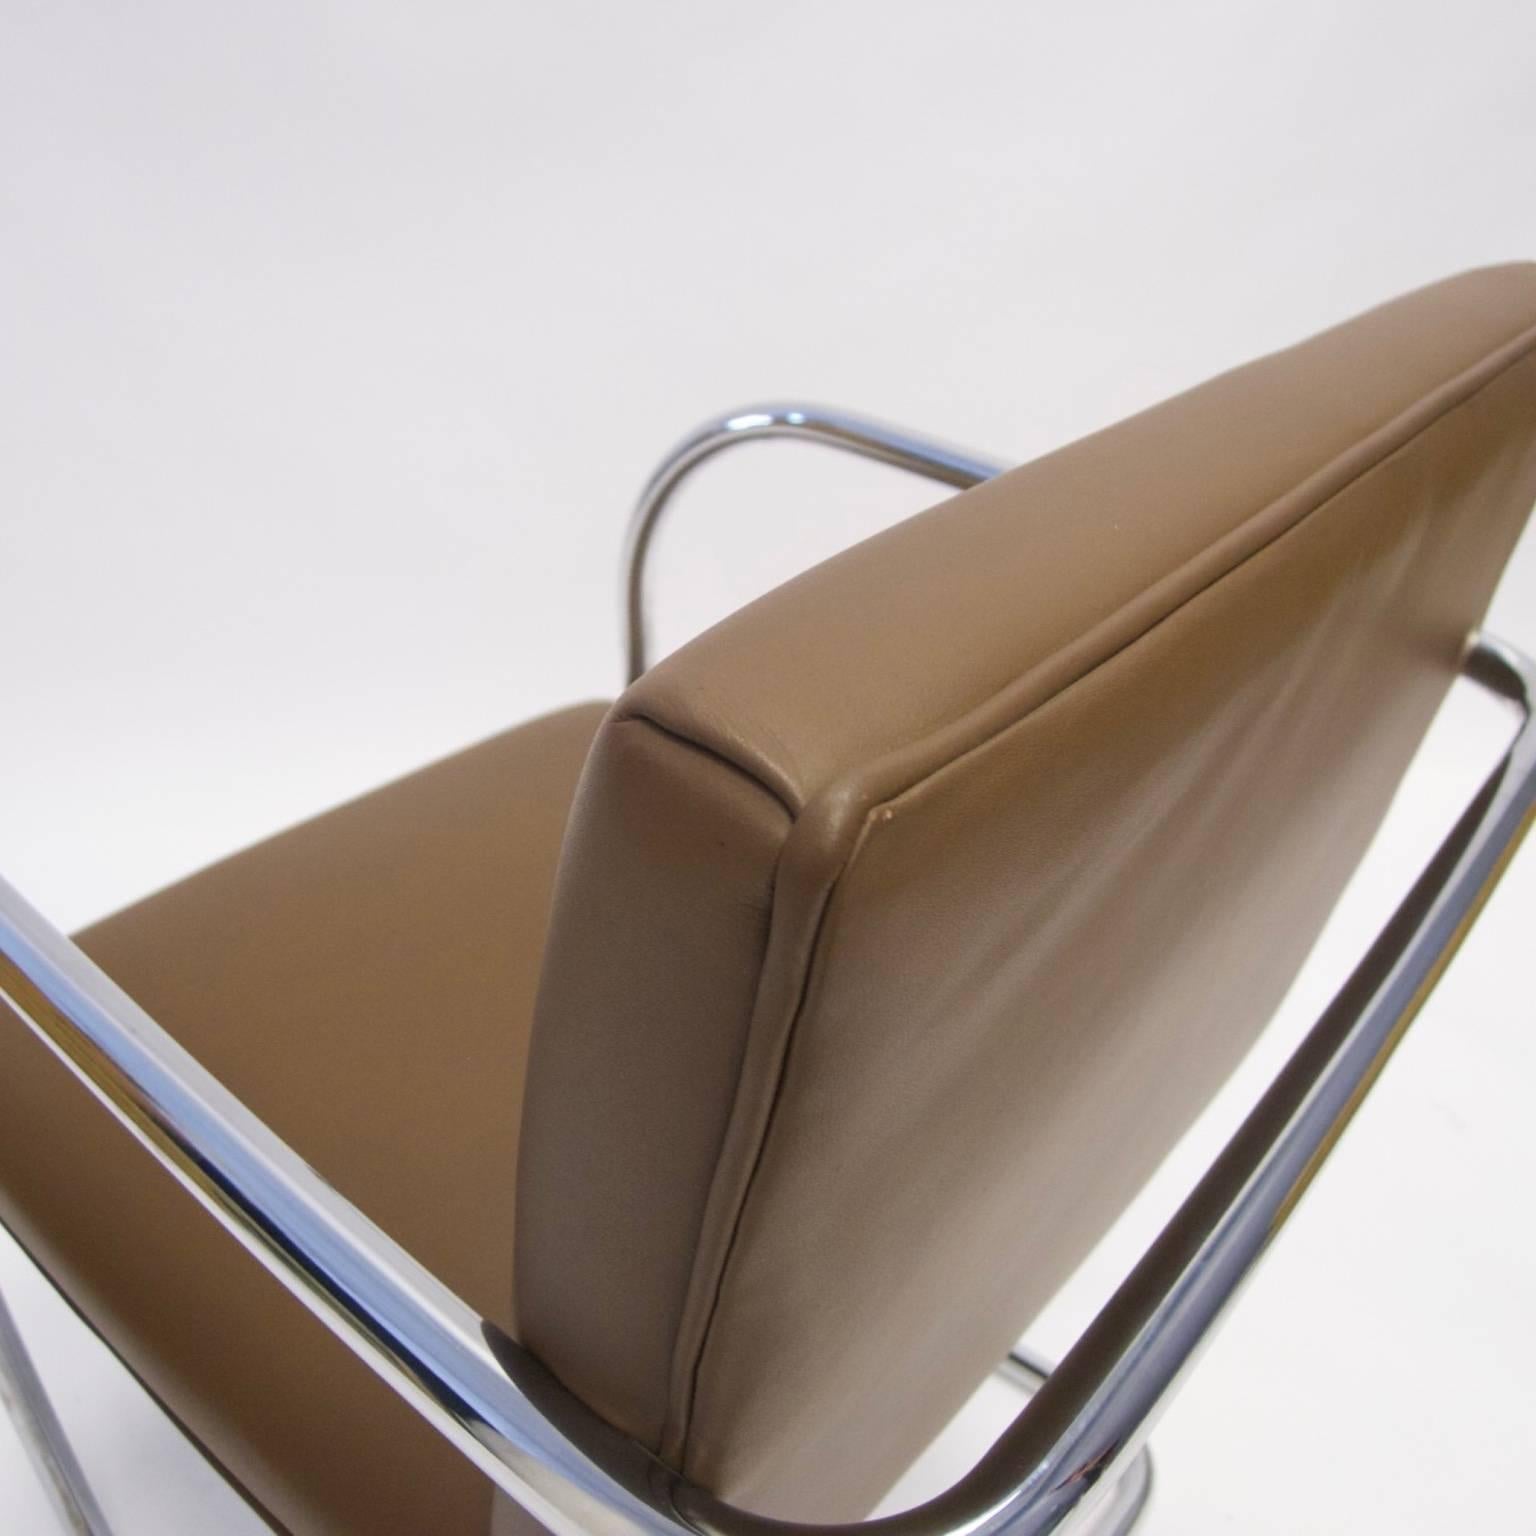 Bauhaus Mies van der Rohe Brno Tubular Lounge Chair in Leather